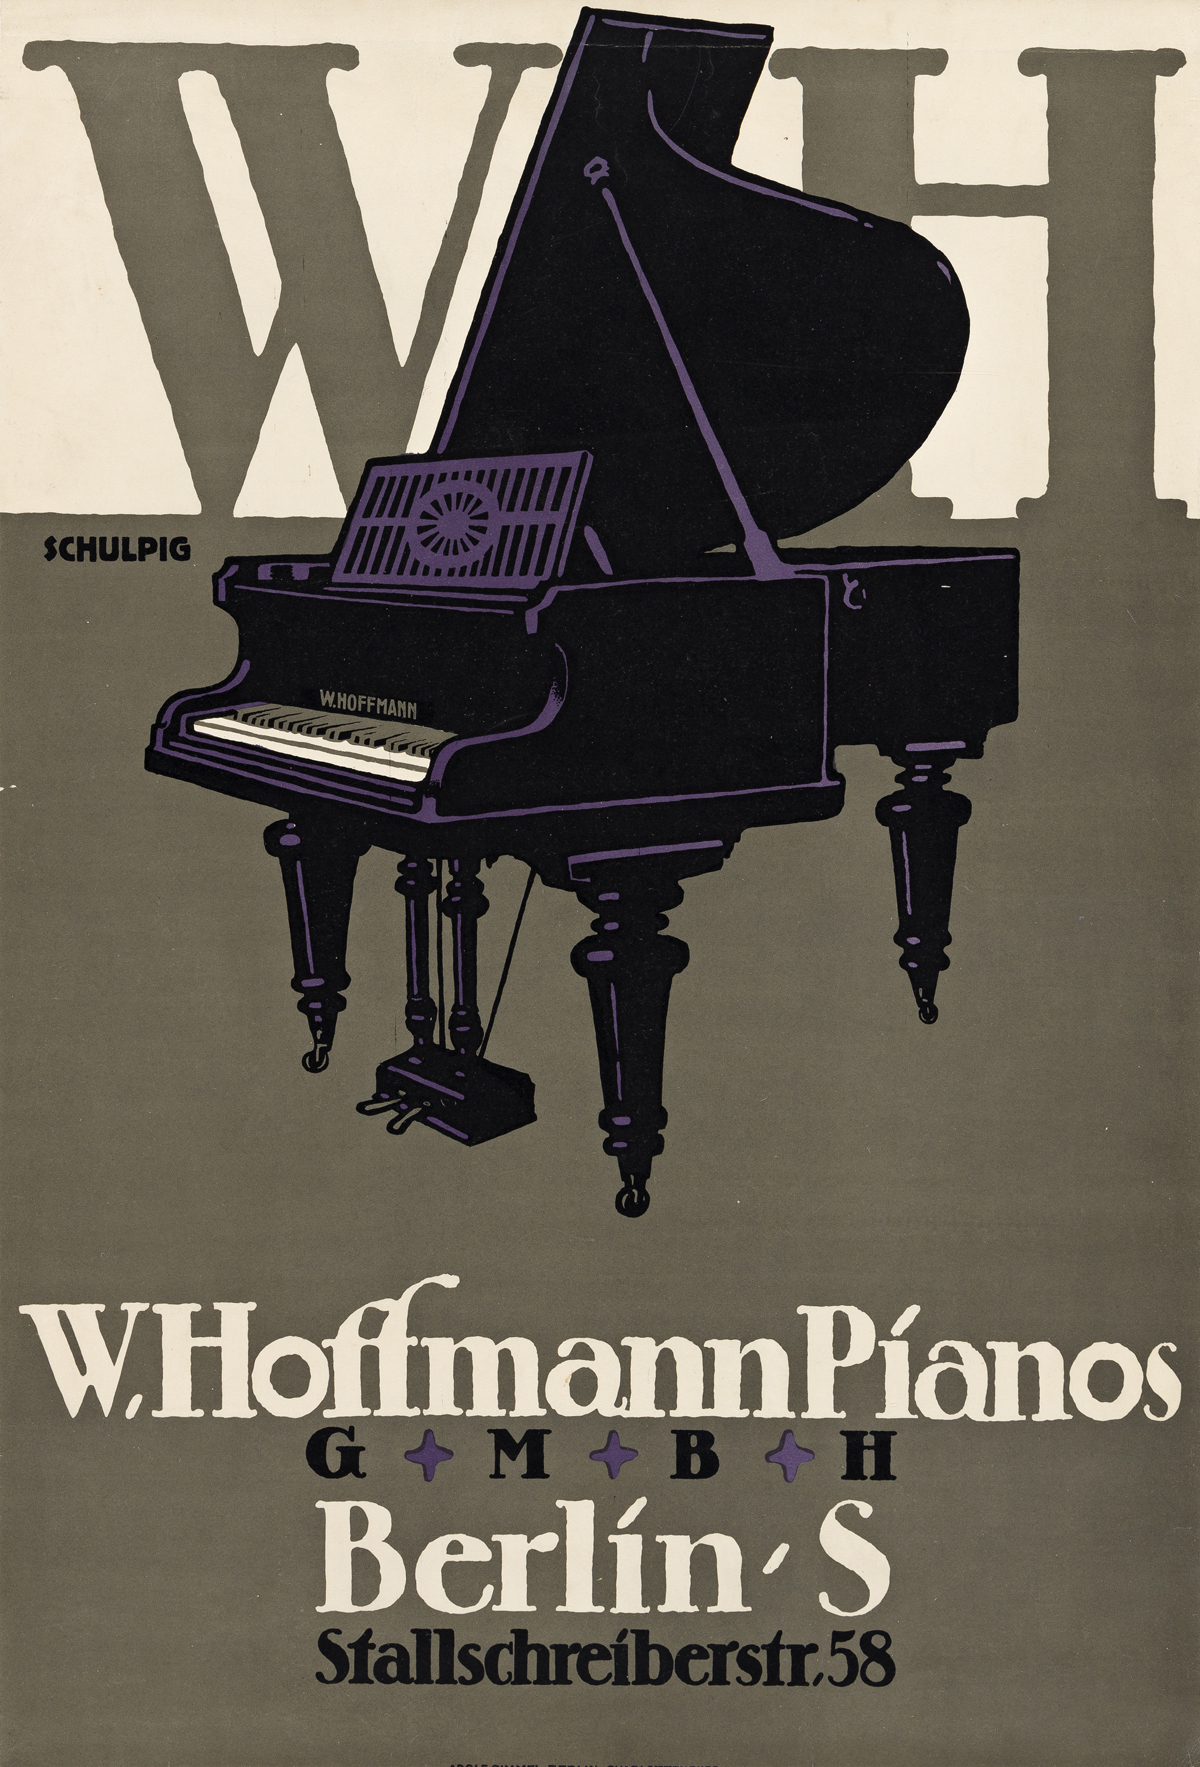 KARL SCHULPIG (1884-1948).  W. HOFFMANN PIANOS. 1912. 27x18¼ inches, 68½x46¼ cm. Adolf Simmel, Berlin.